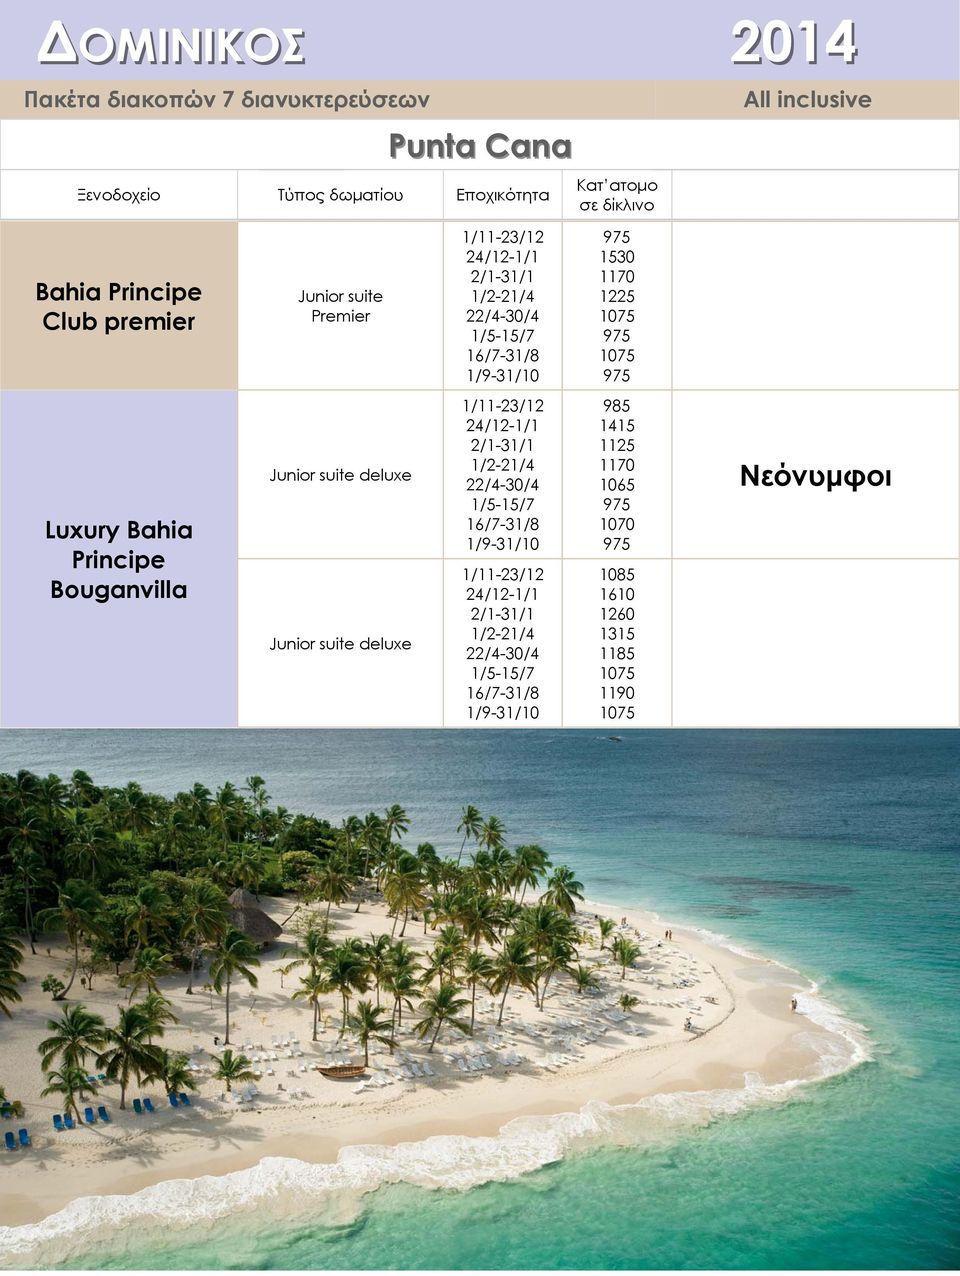 975 1075 975 Luxury Bahia Principe Bouganvilla deluxe deluxe